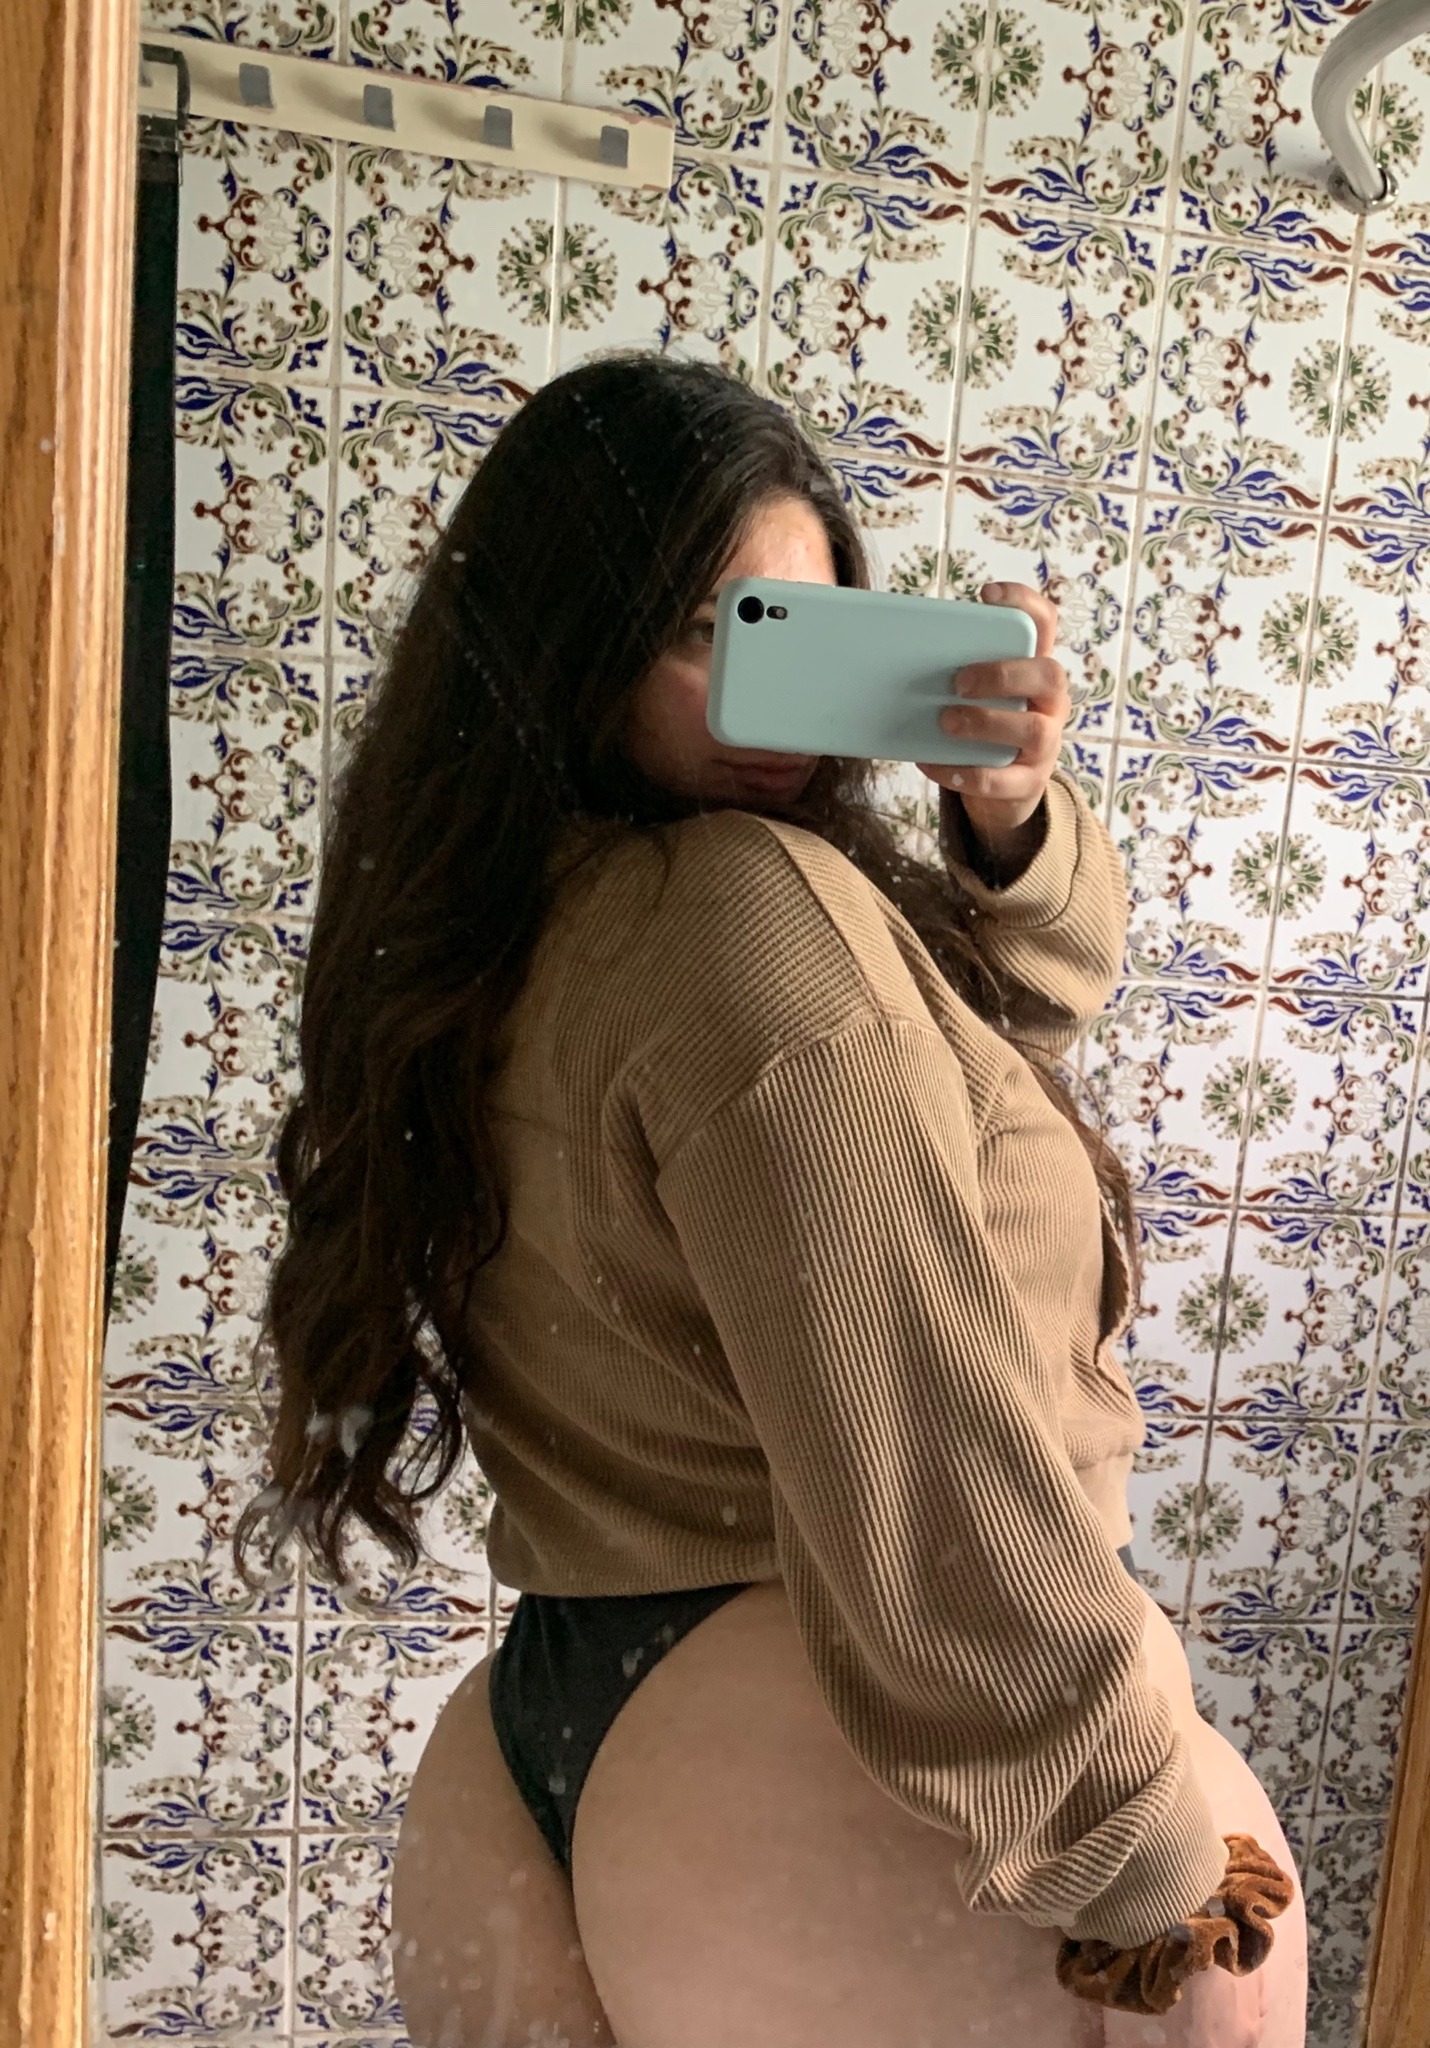 Best latina ass